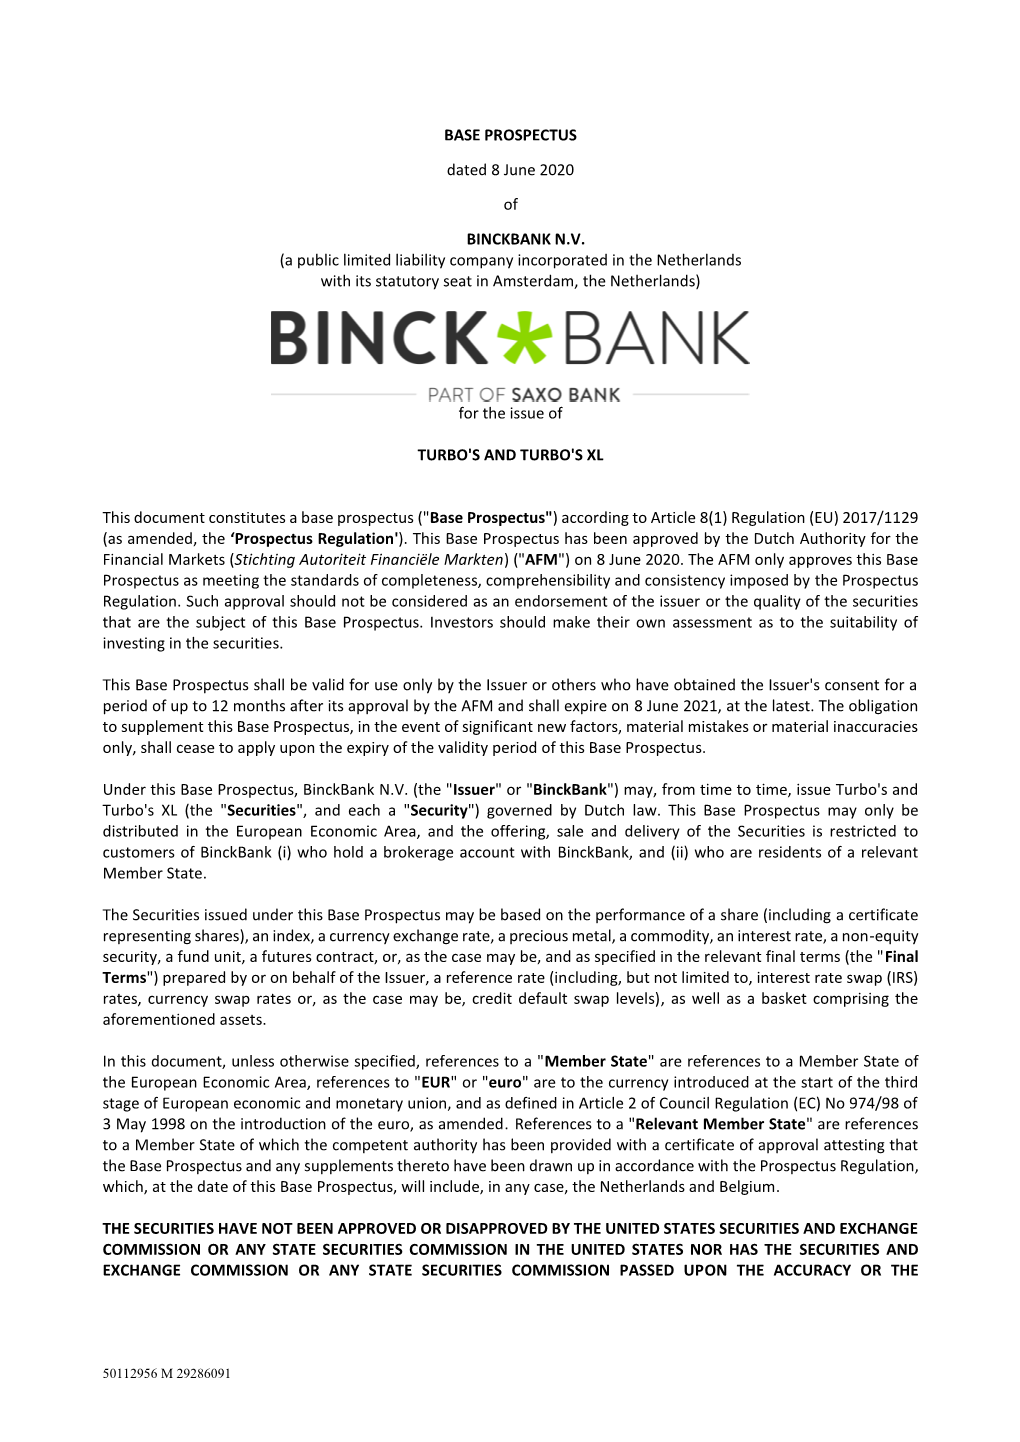 BASE PROSPECTUS Dated 8 June 2020 of BINCKBANK N.V. (A Public